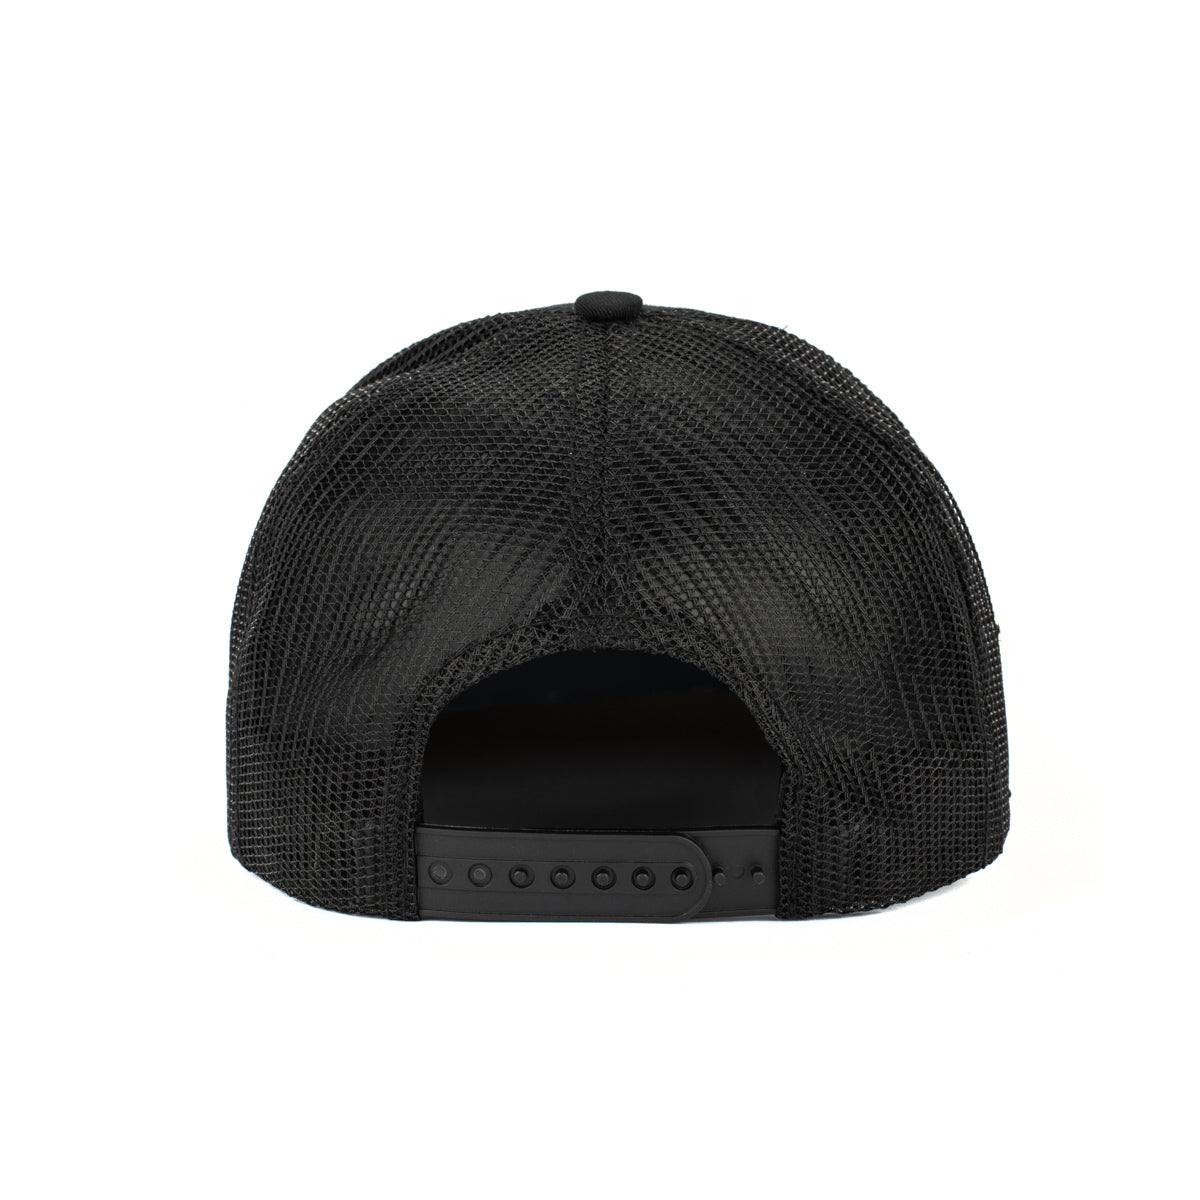 Barstool Sansom Trucker Hat-Hats-Barstool Sports-Black-One Size-Barstool Sports